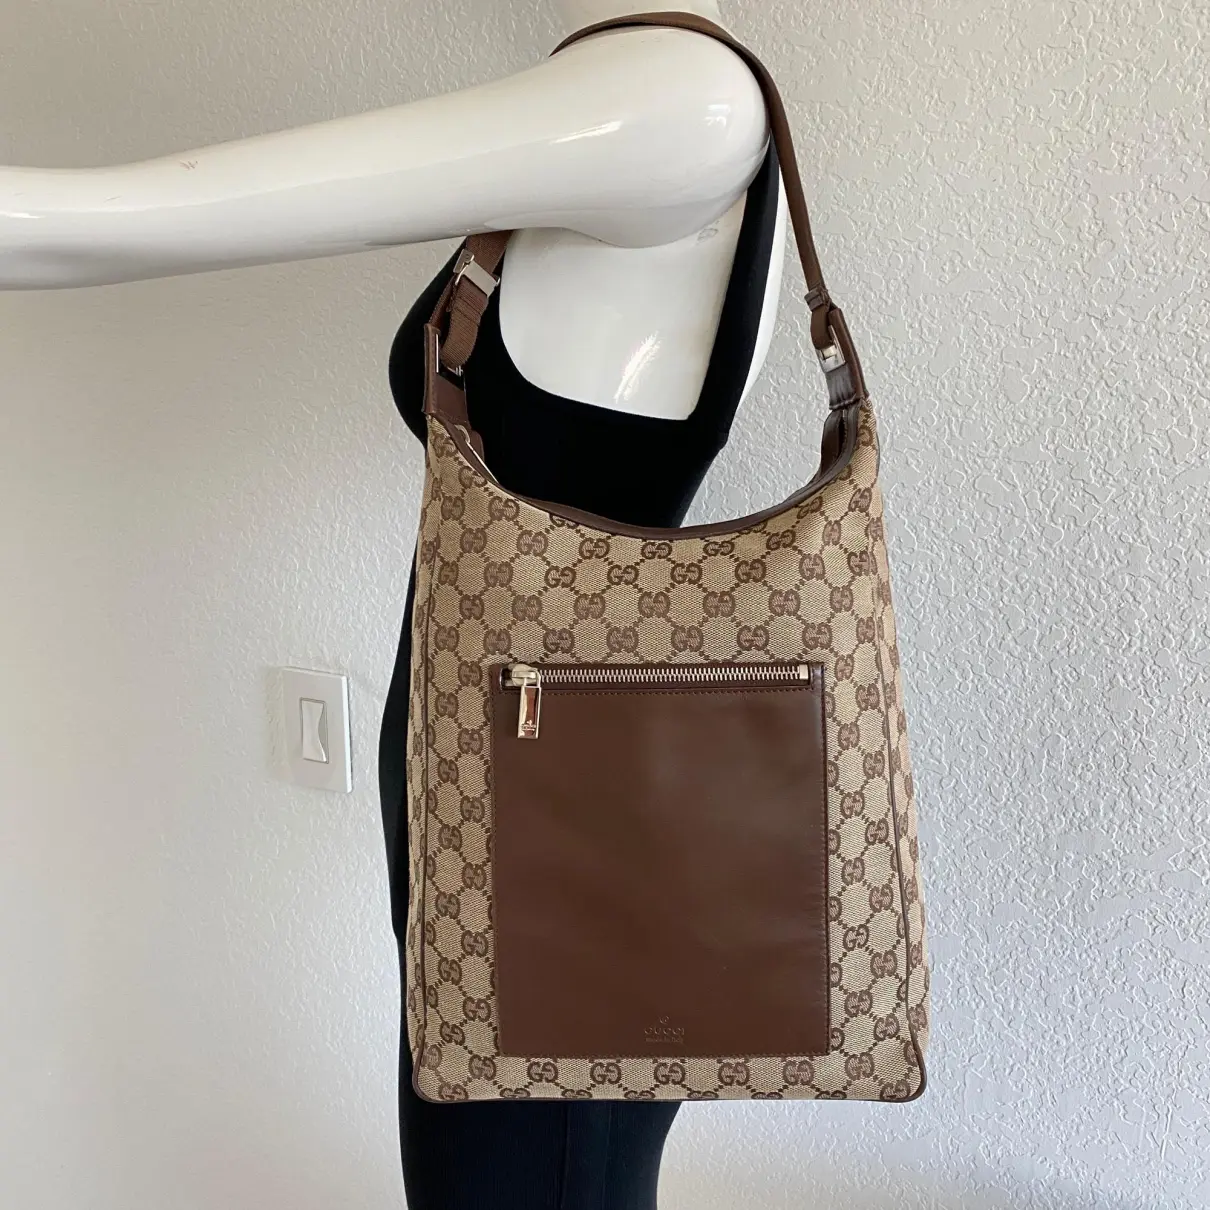 Buy Gucci Ophidia Messenger leather handbag online